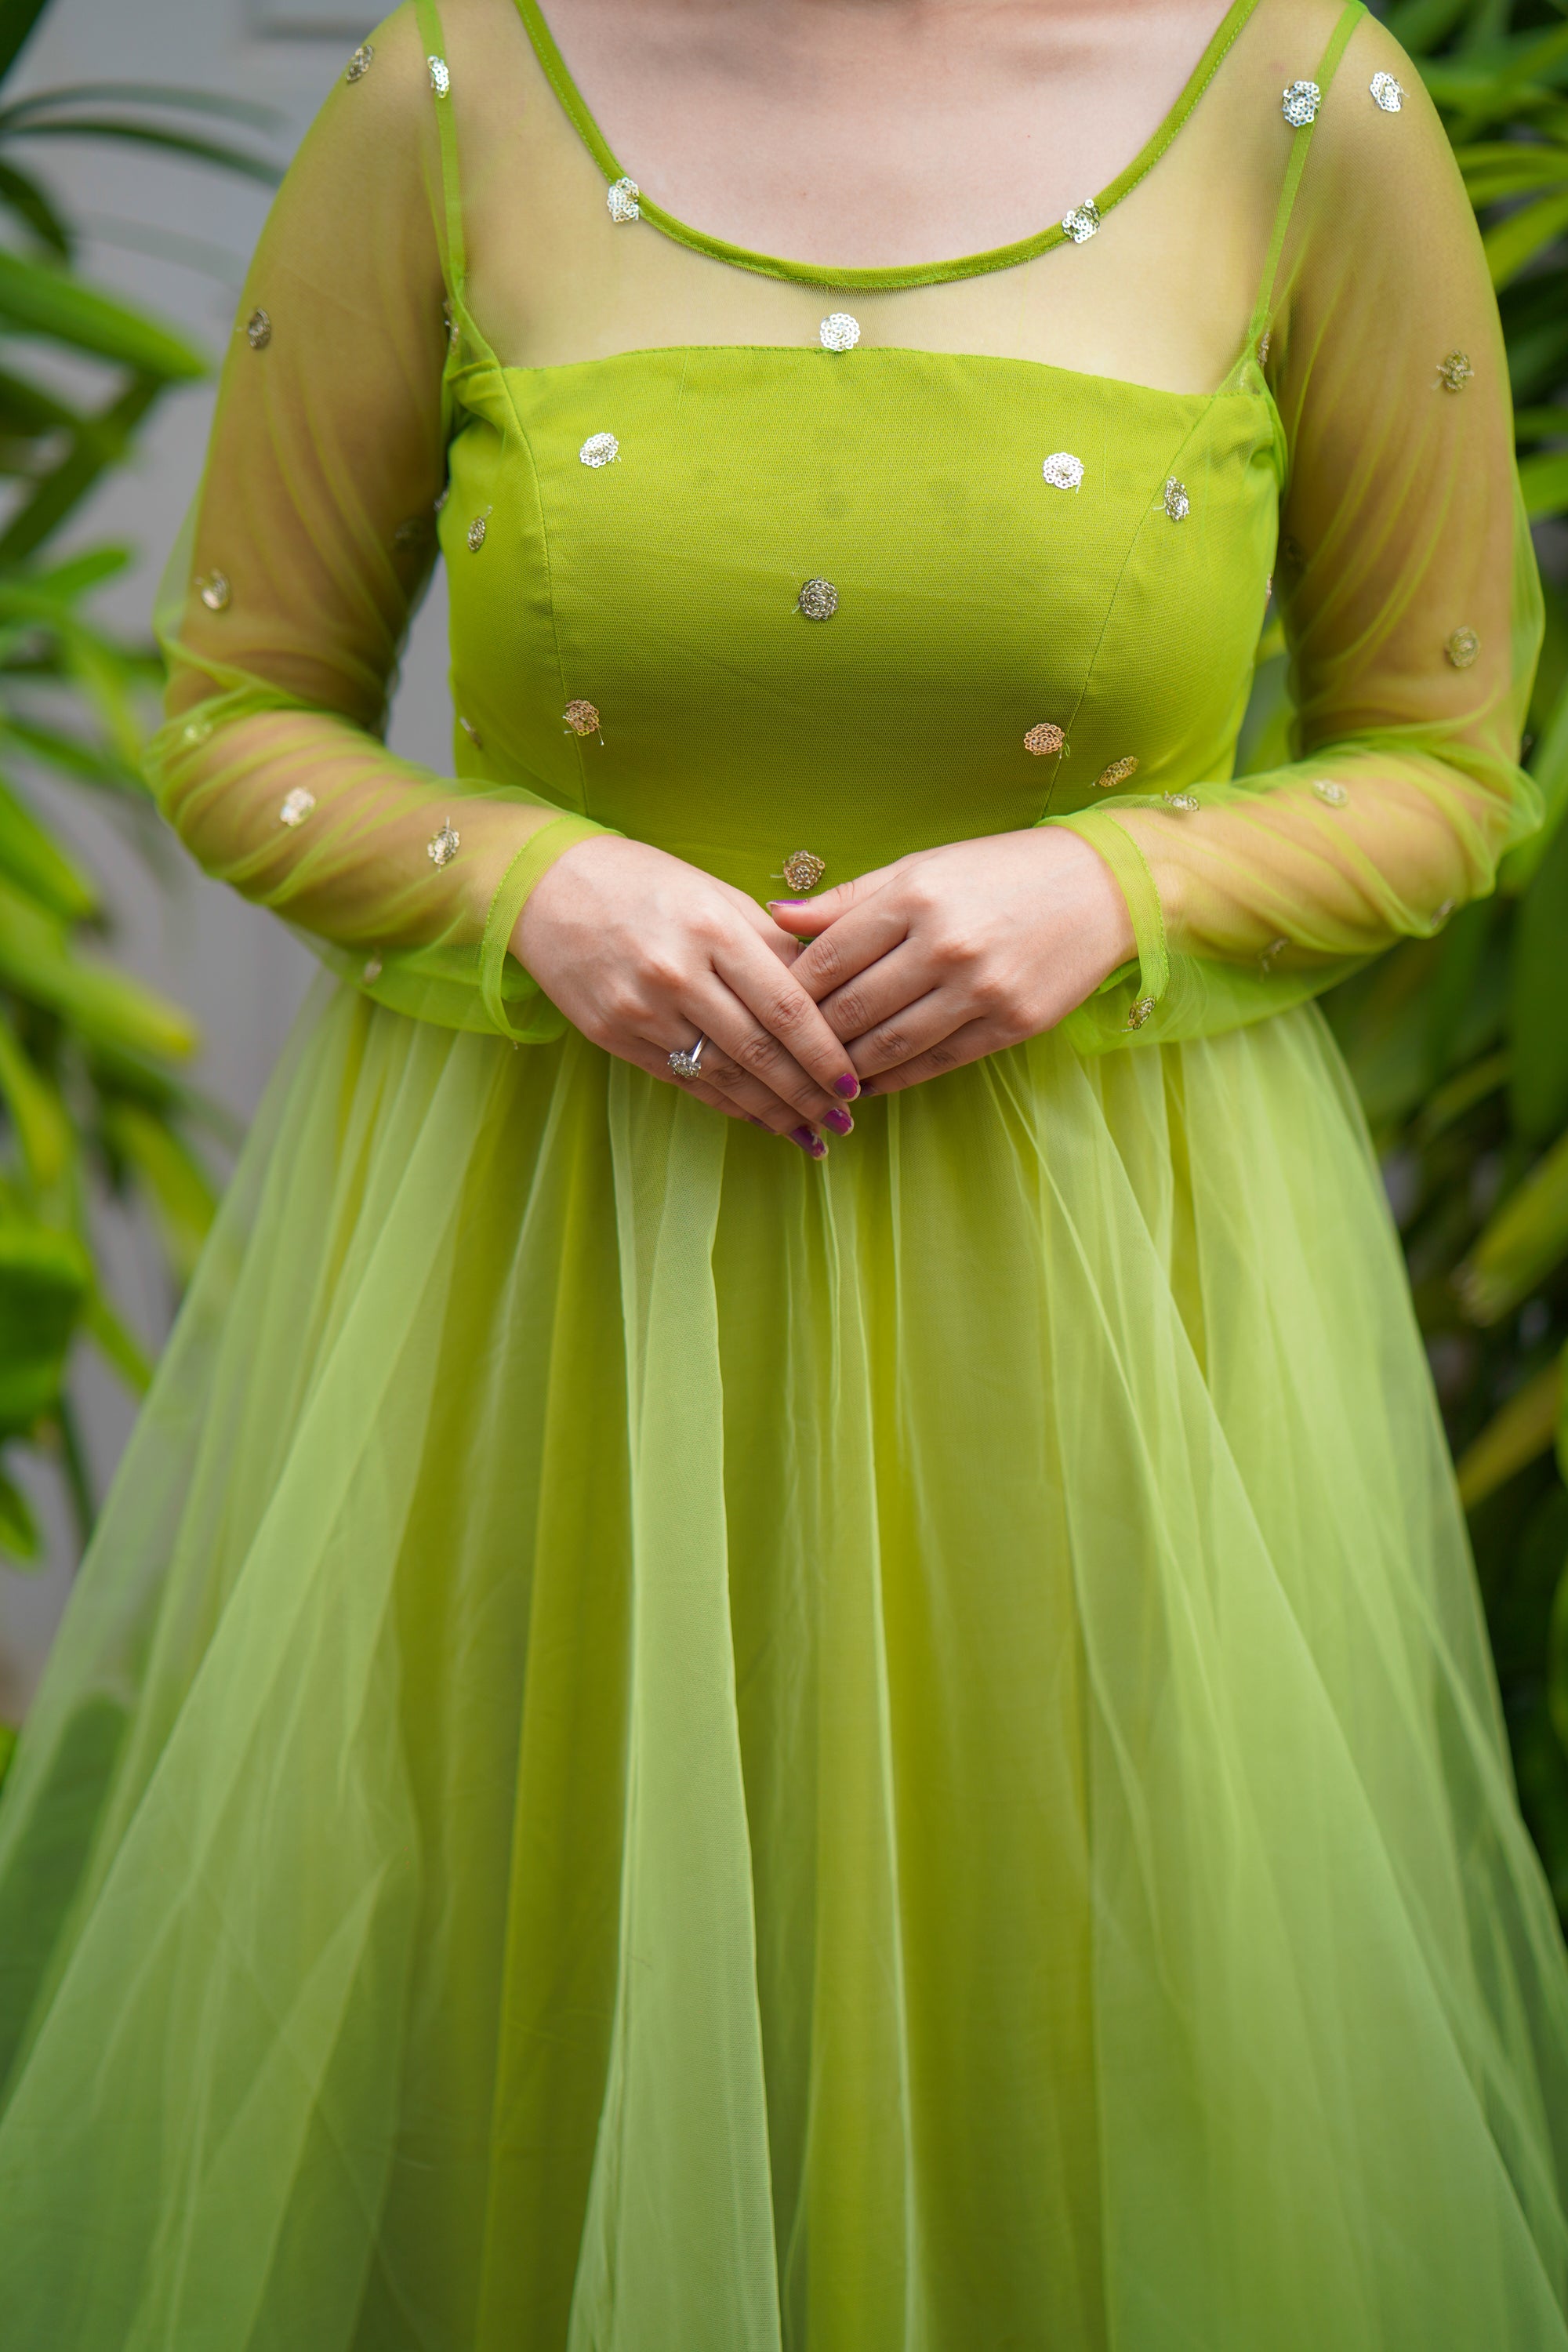 Net Umbrella Frock 3 Piece Set Indian/Pakistani Festive/Wedding Dress | eBay